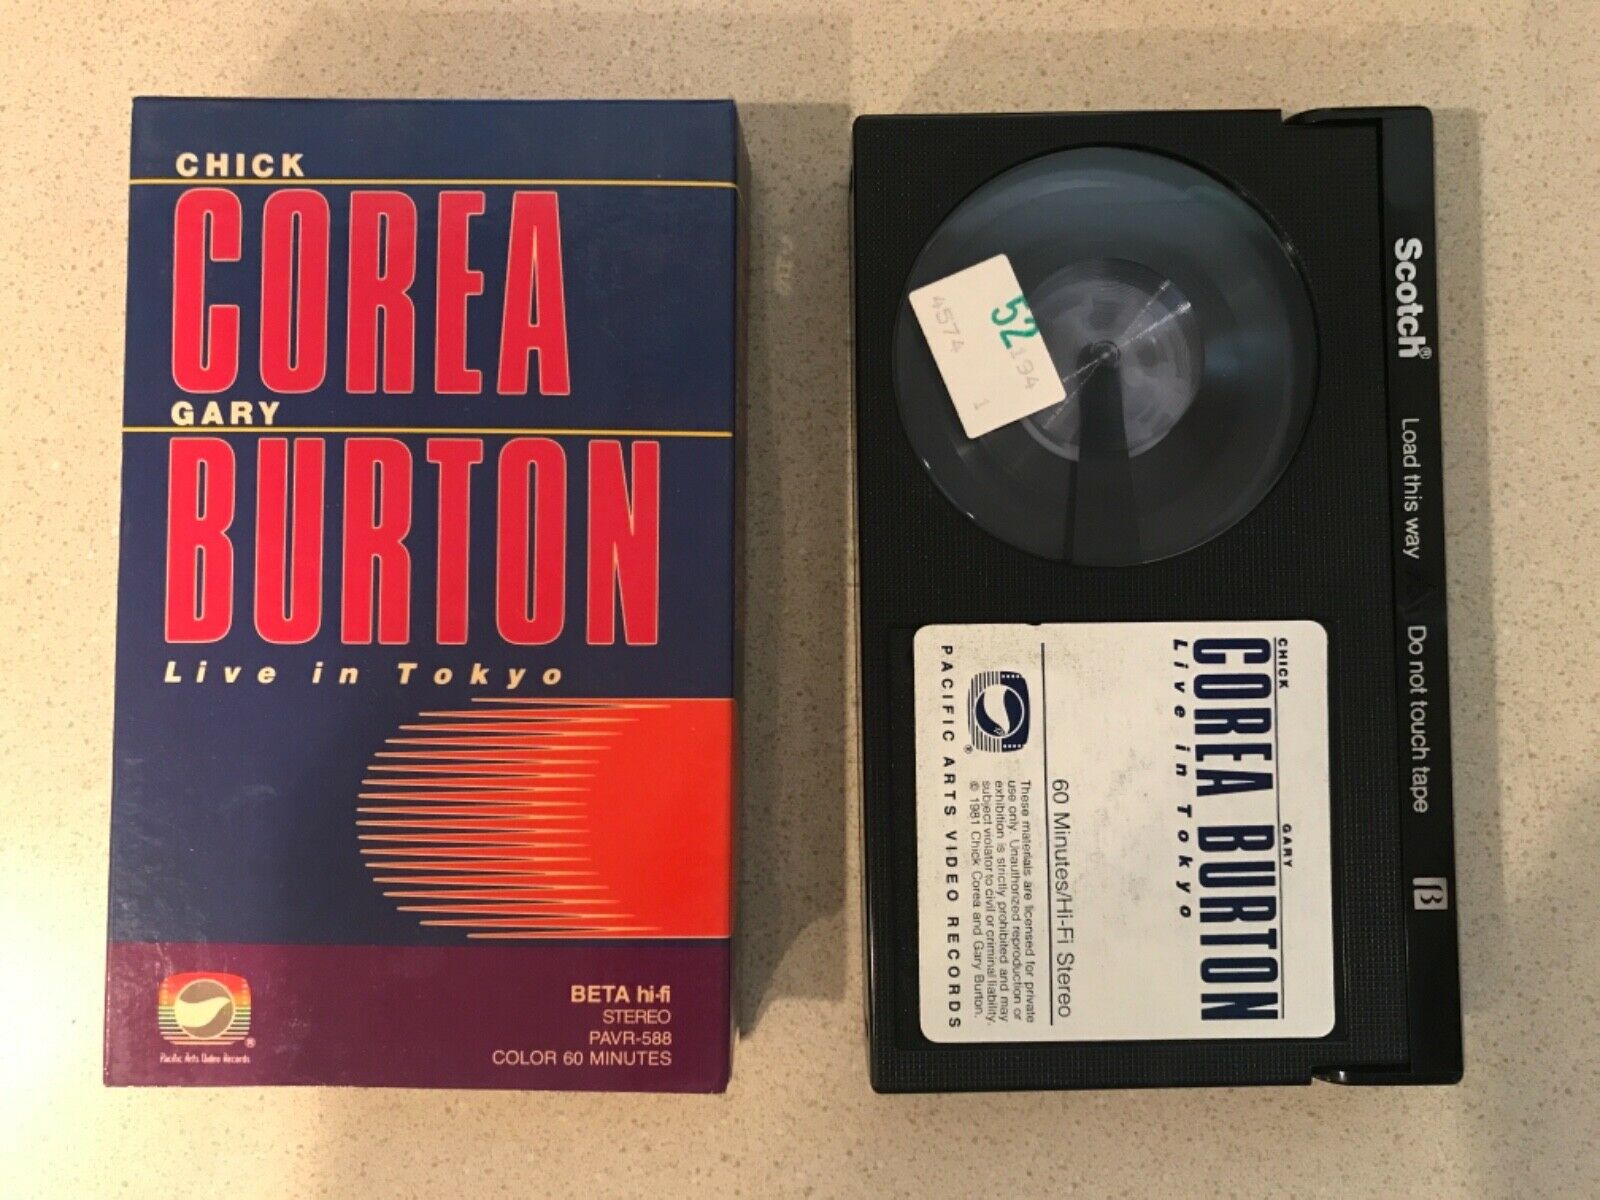 Chick Corea And Gary Burton Live In Tokyo (beta, 1985)